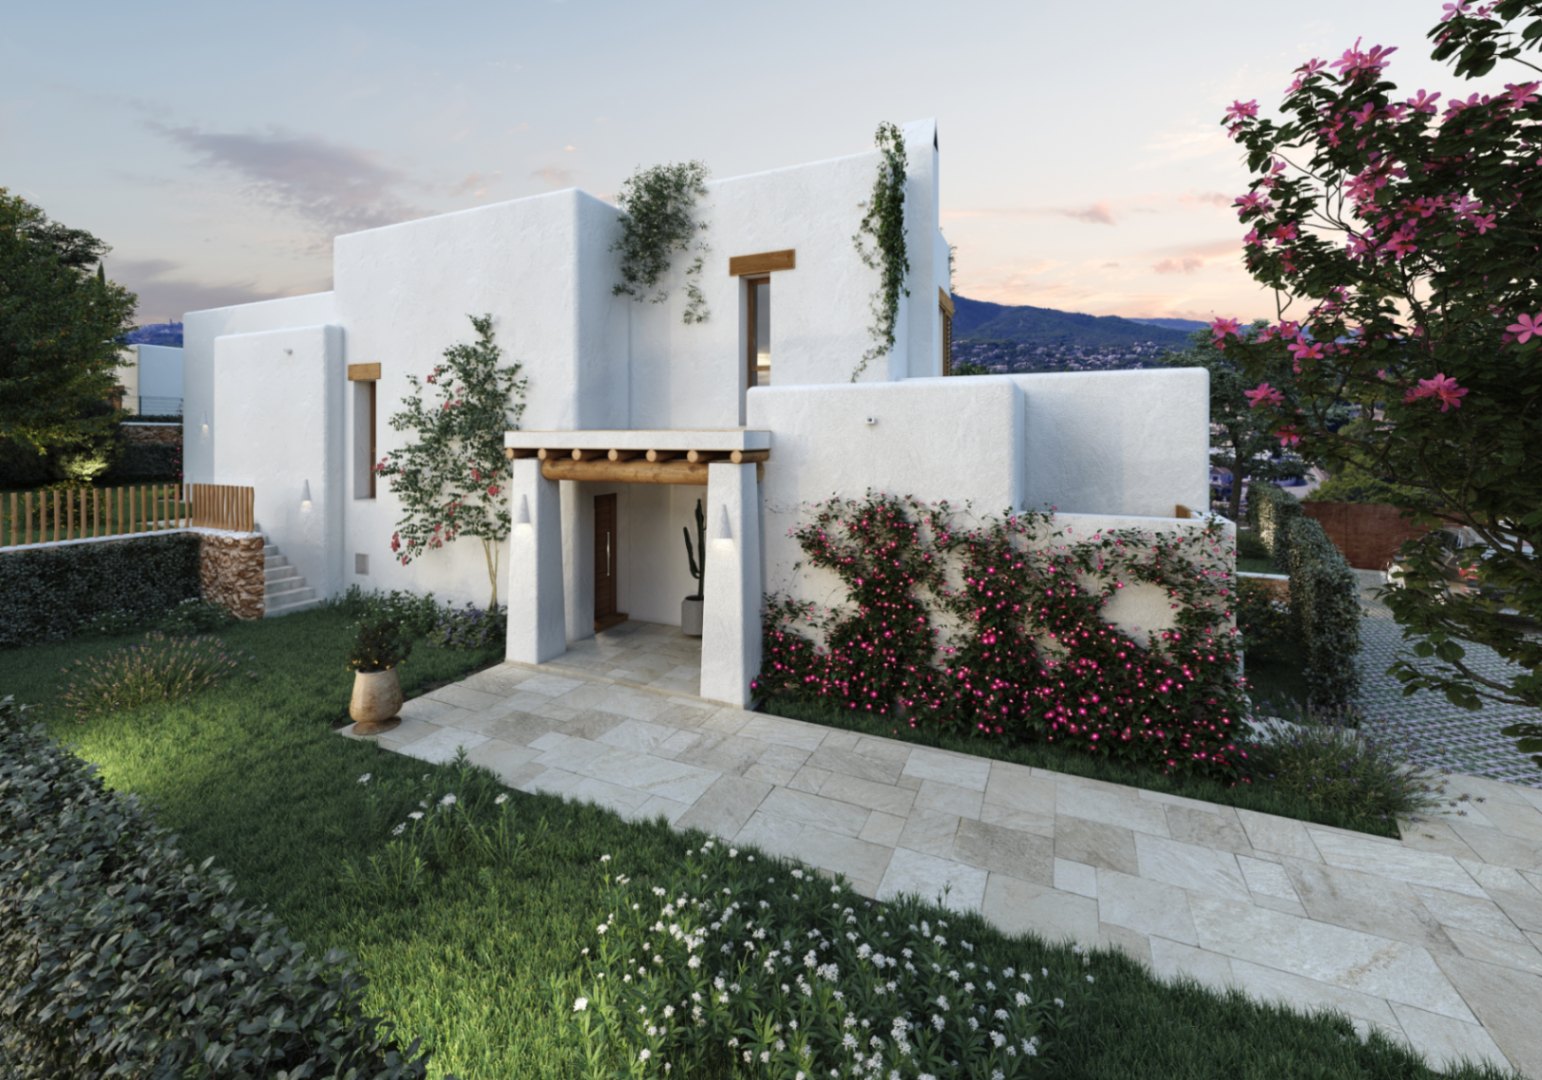 Villa neuve de style Ibiza à vendre à Las Lomas del Rey Jávea, Costa Blanca